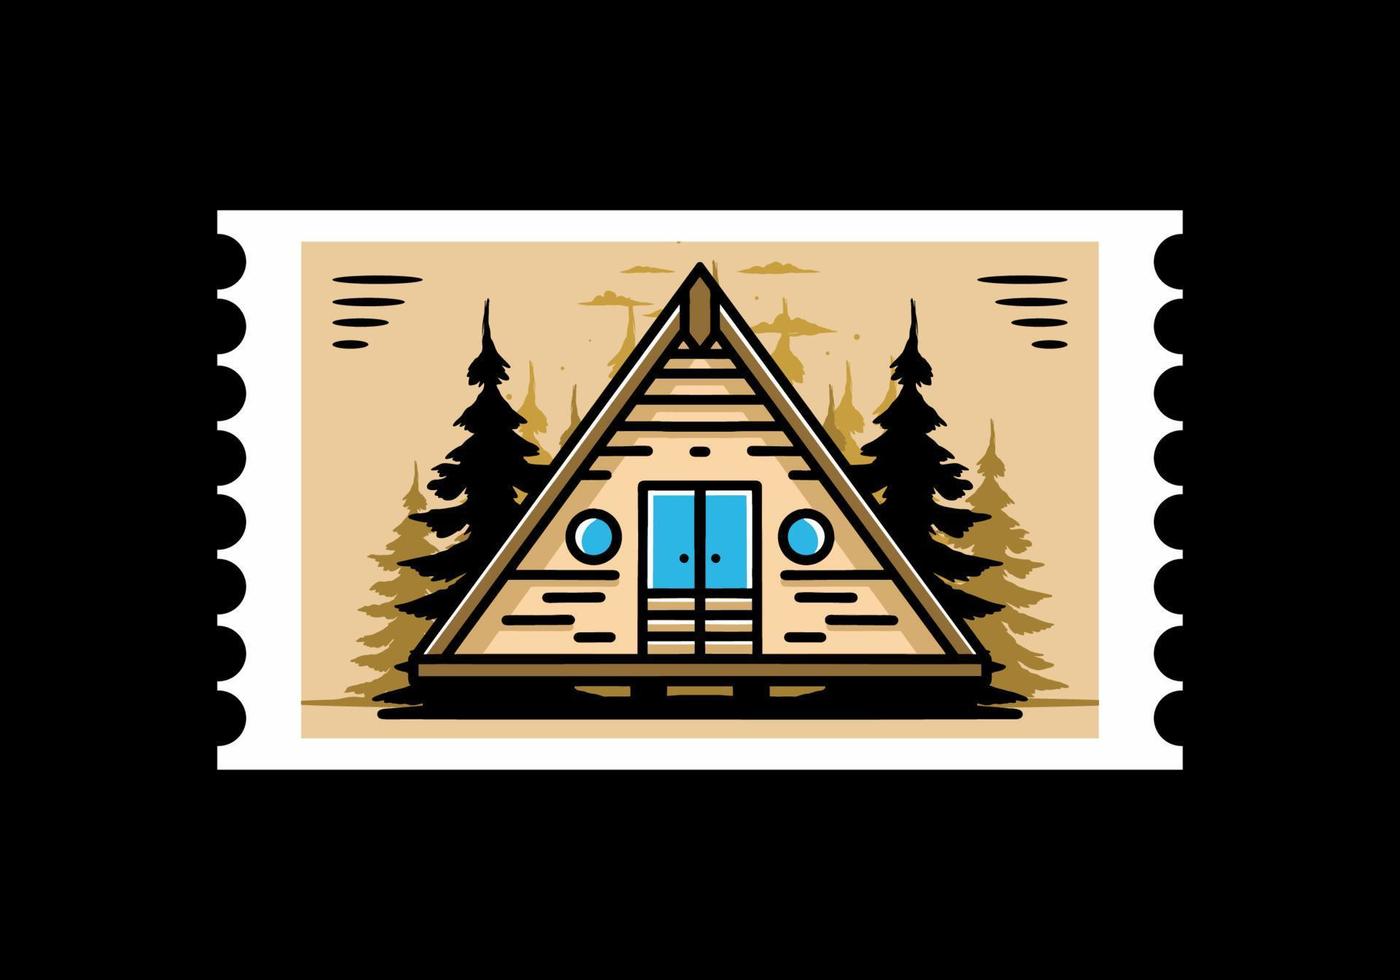 Triangle wood cabin illustration design vector